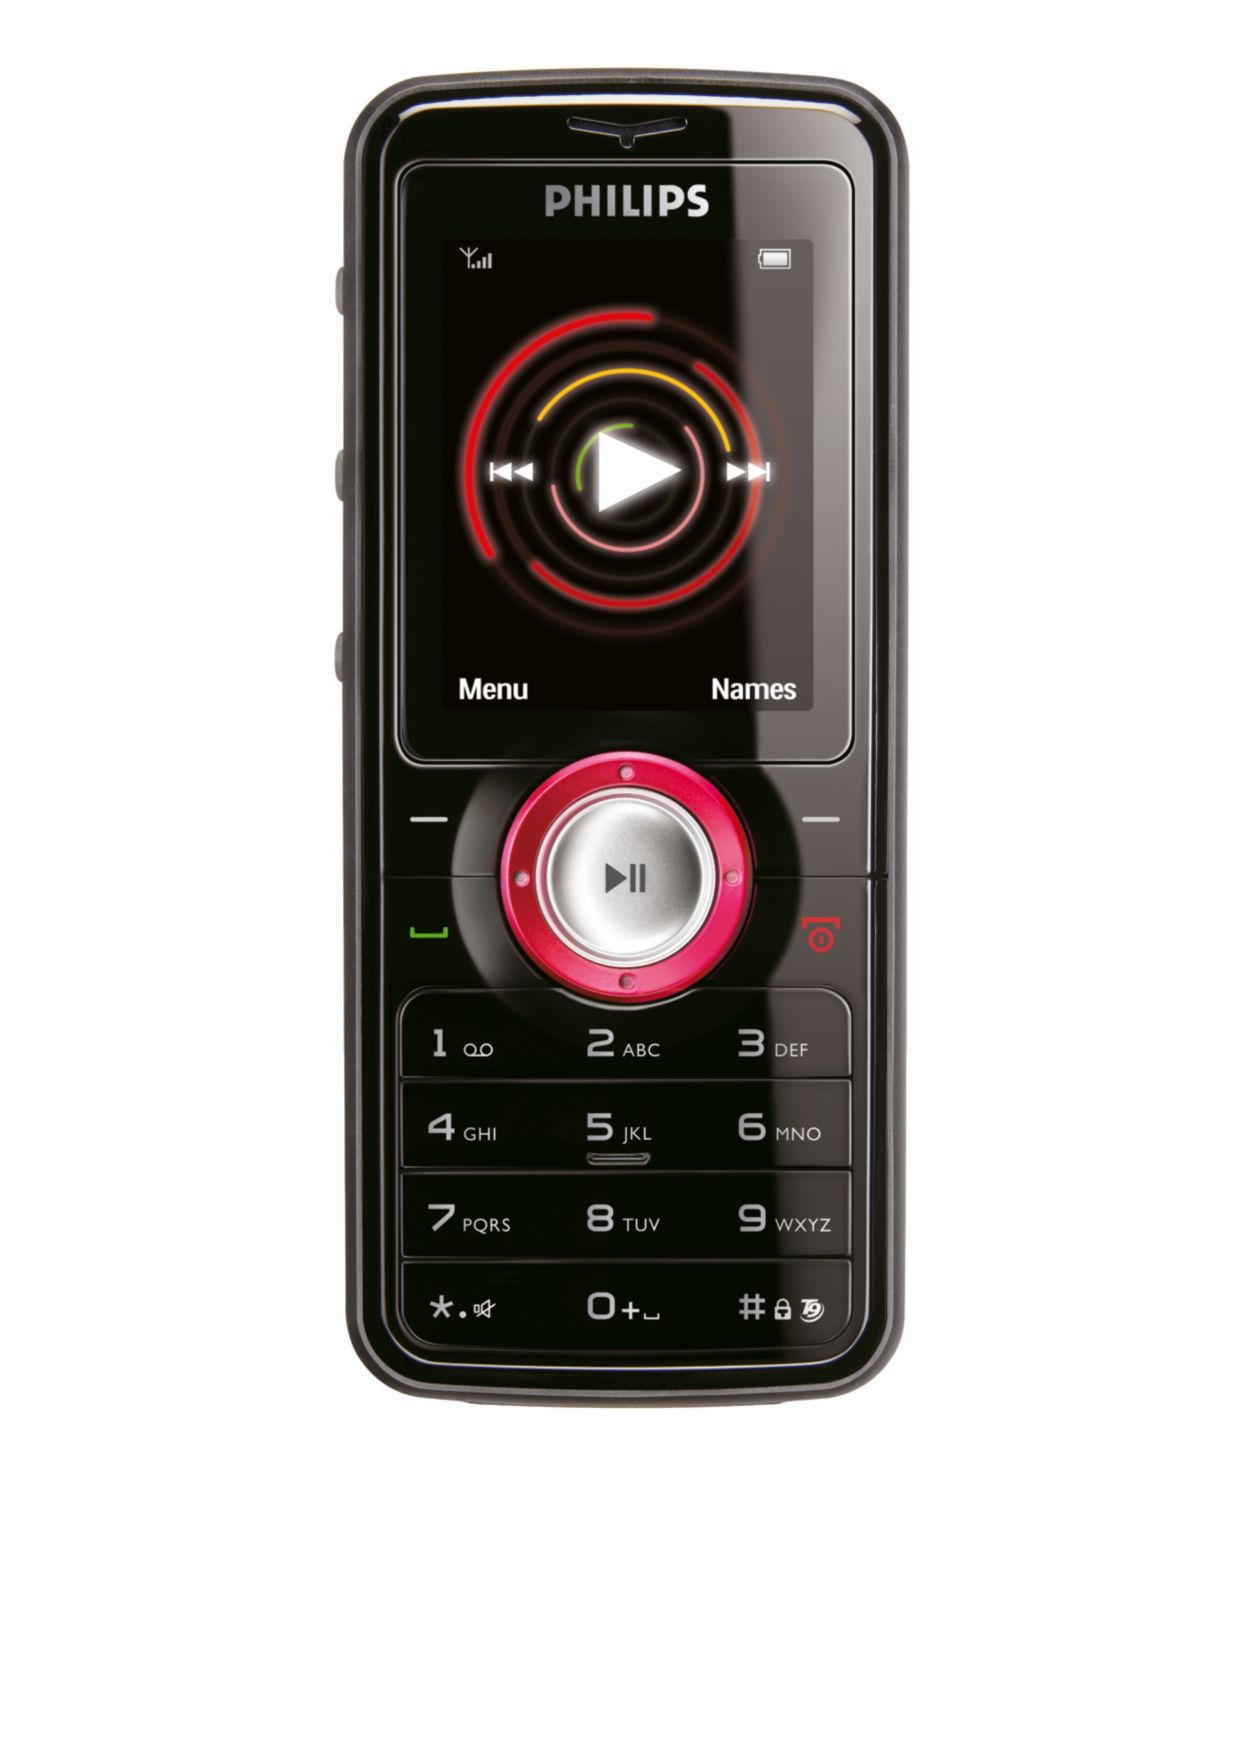 Филипс 200. Philips m200. Мобильный телефон Philips m200. Philips x 200. Philips 200 телефон.